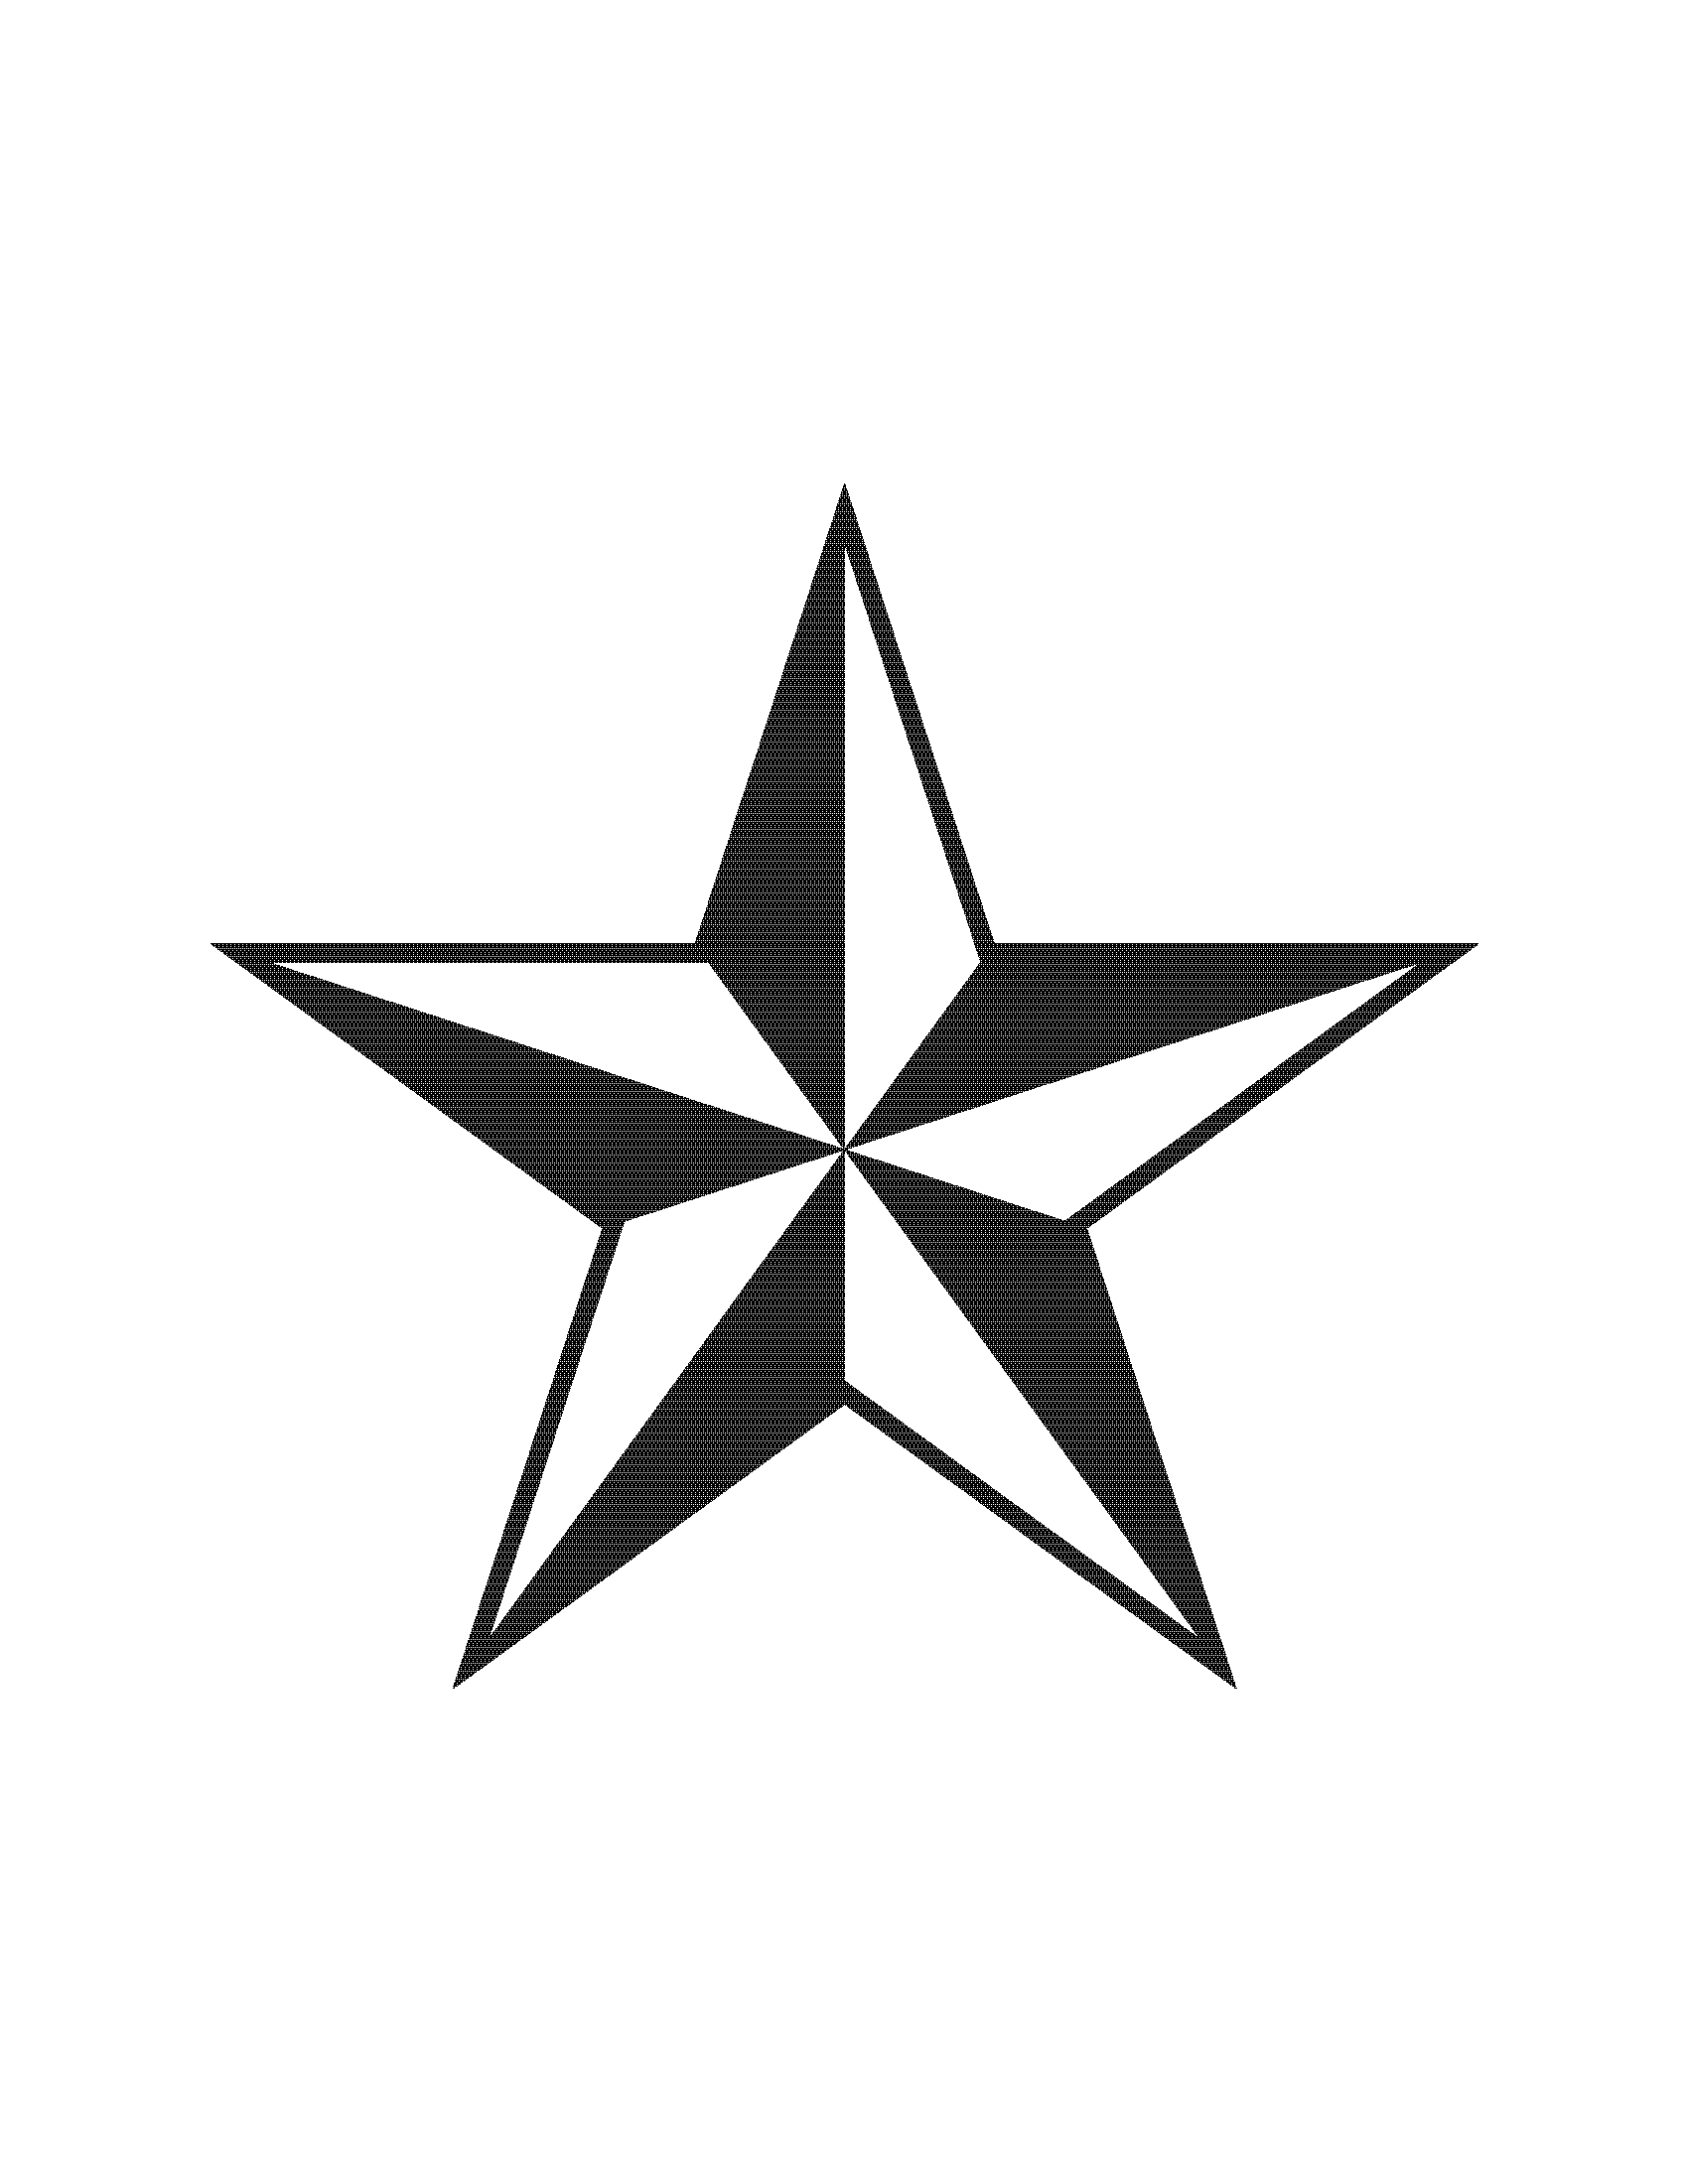 ... Texas star clip art ... - Texas Star Clip Art